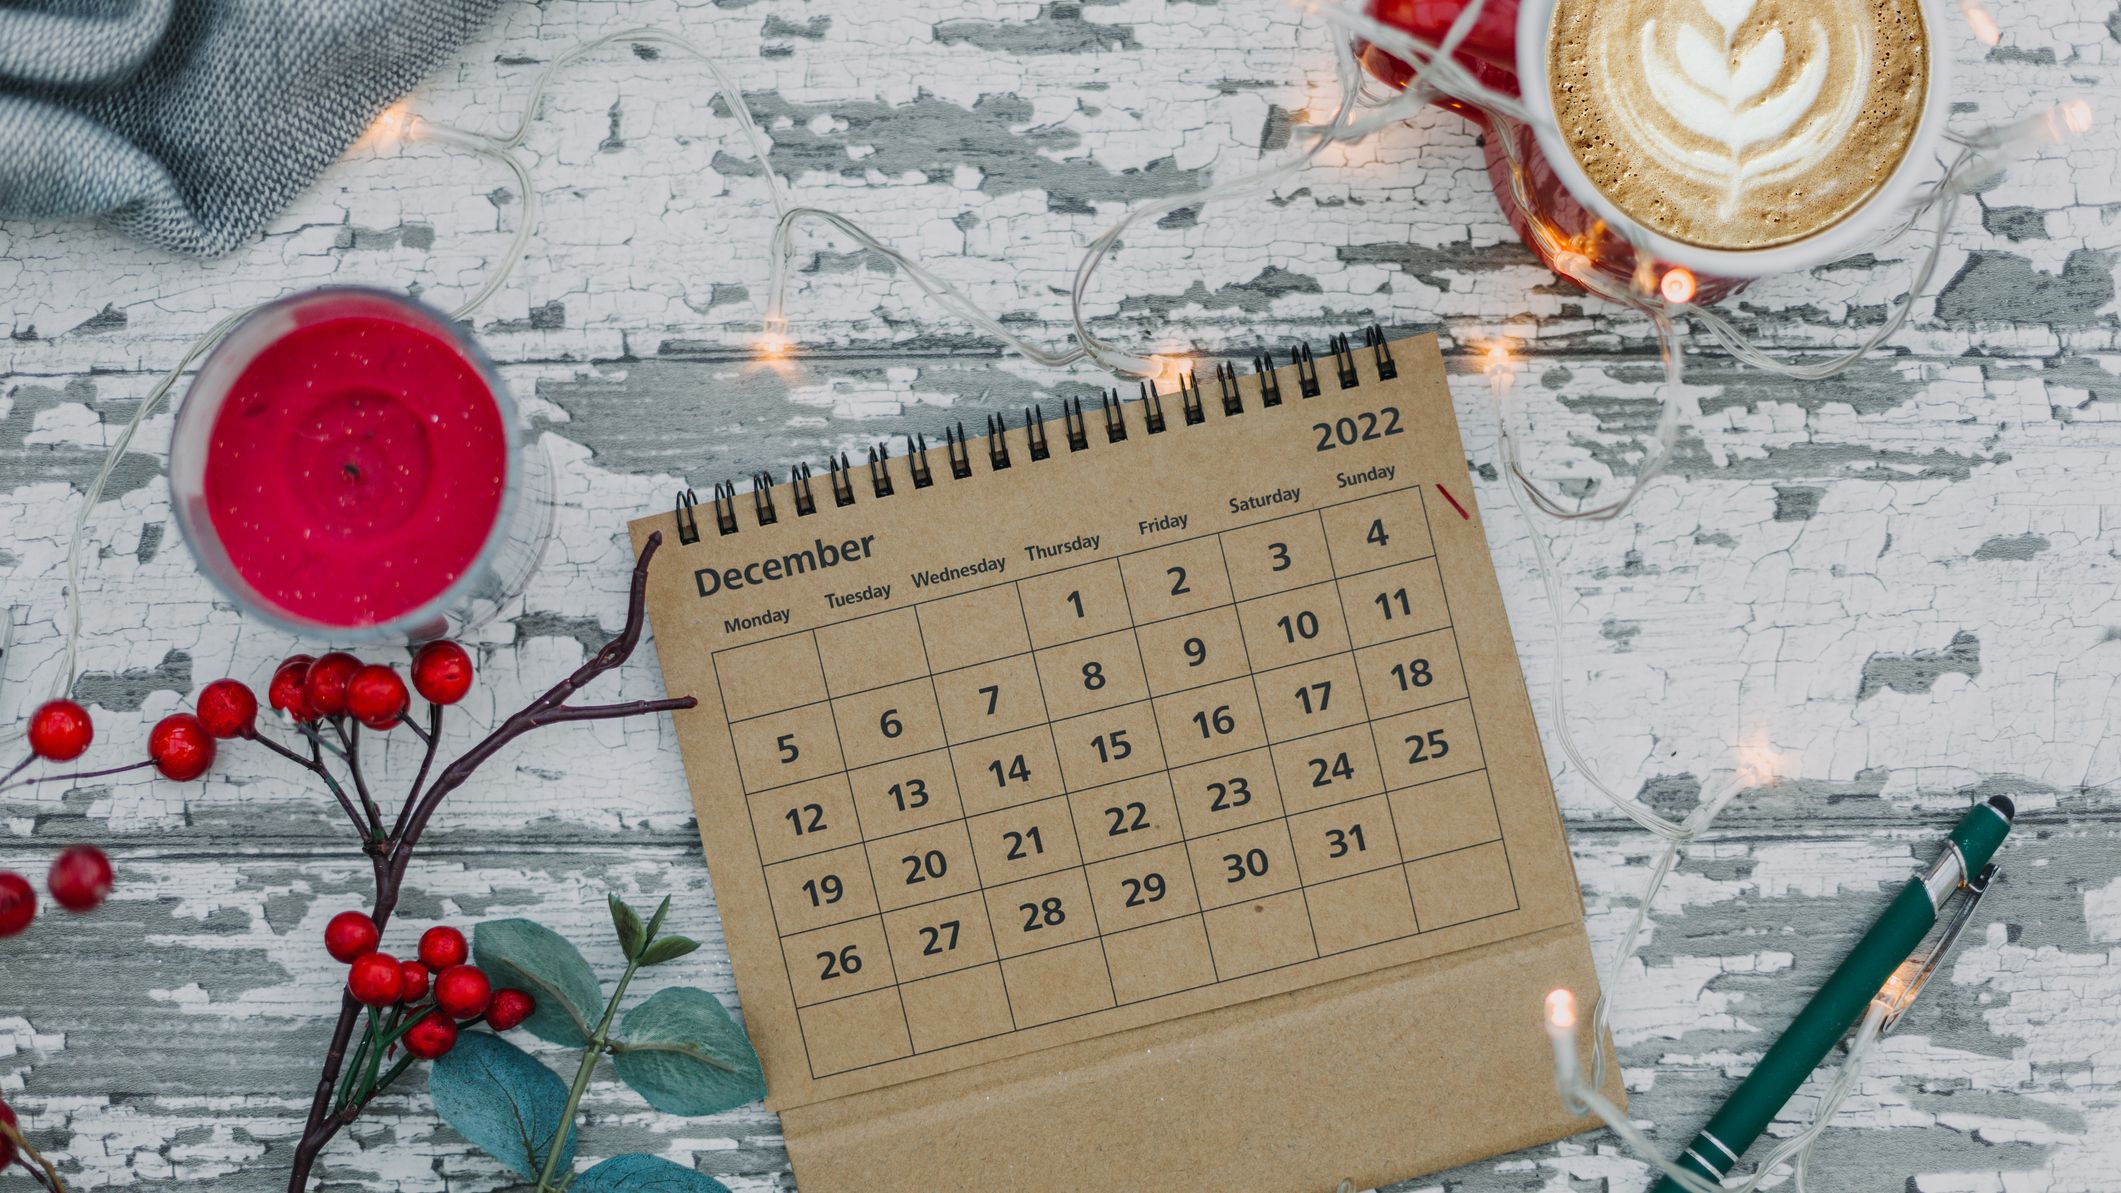 December Holidays and National Days - 2022 Calendar of Holidays